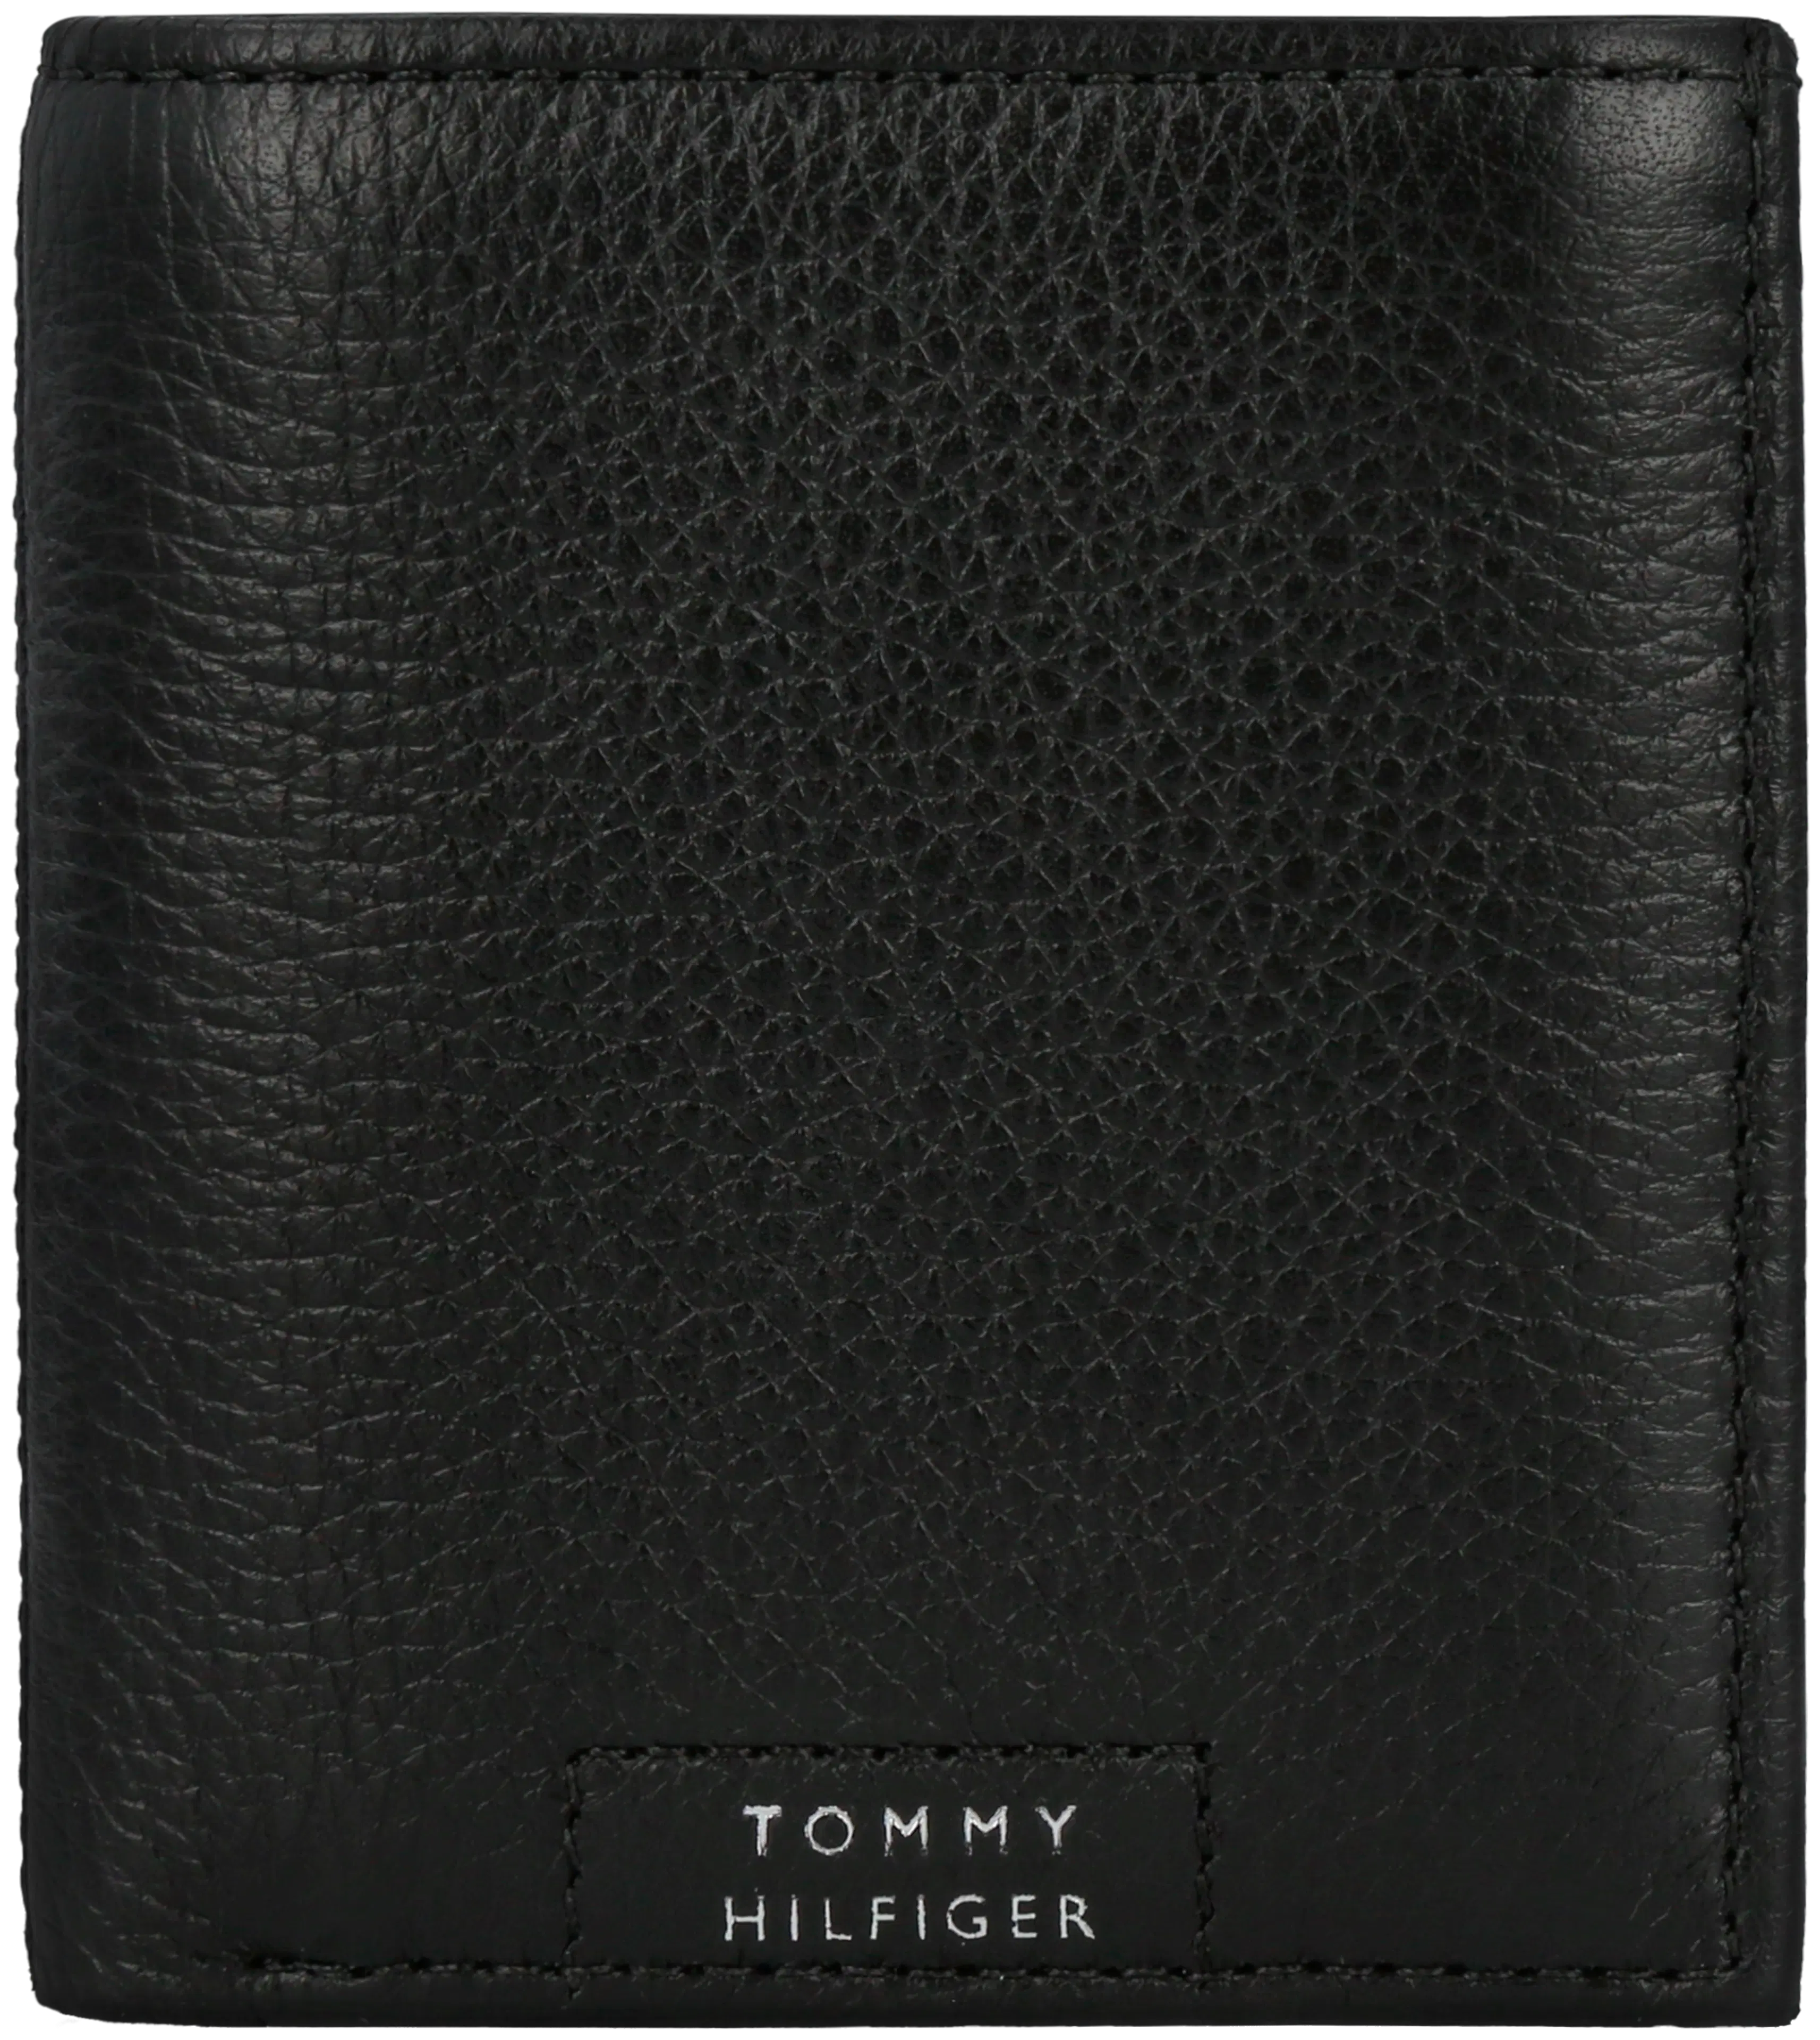 Tommy Hilfiger Th prem leather trifold lompakko